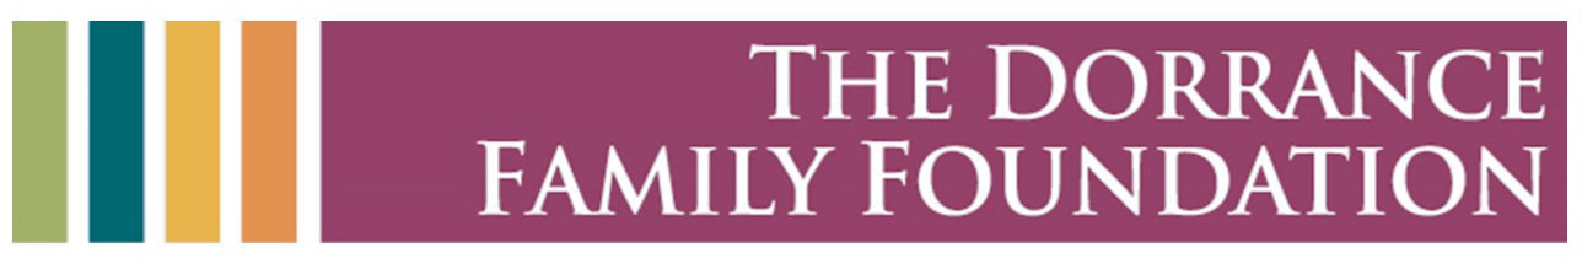 the dorrance family foundation logo